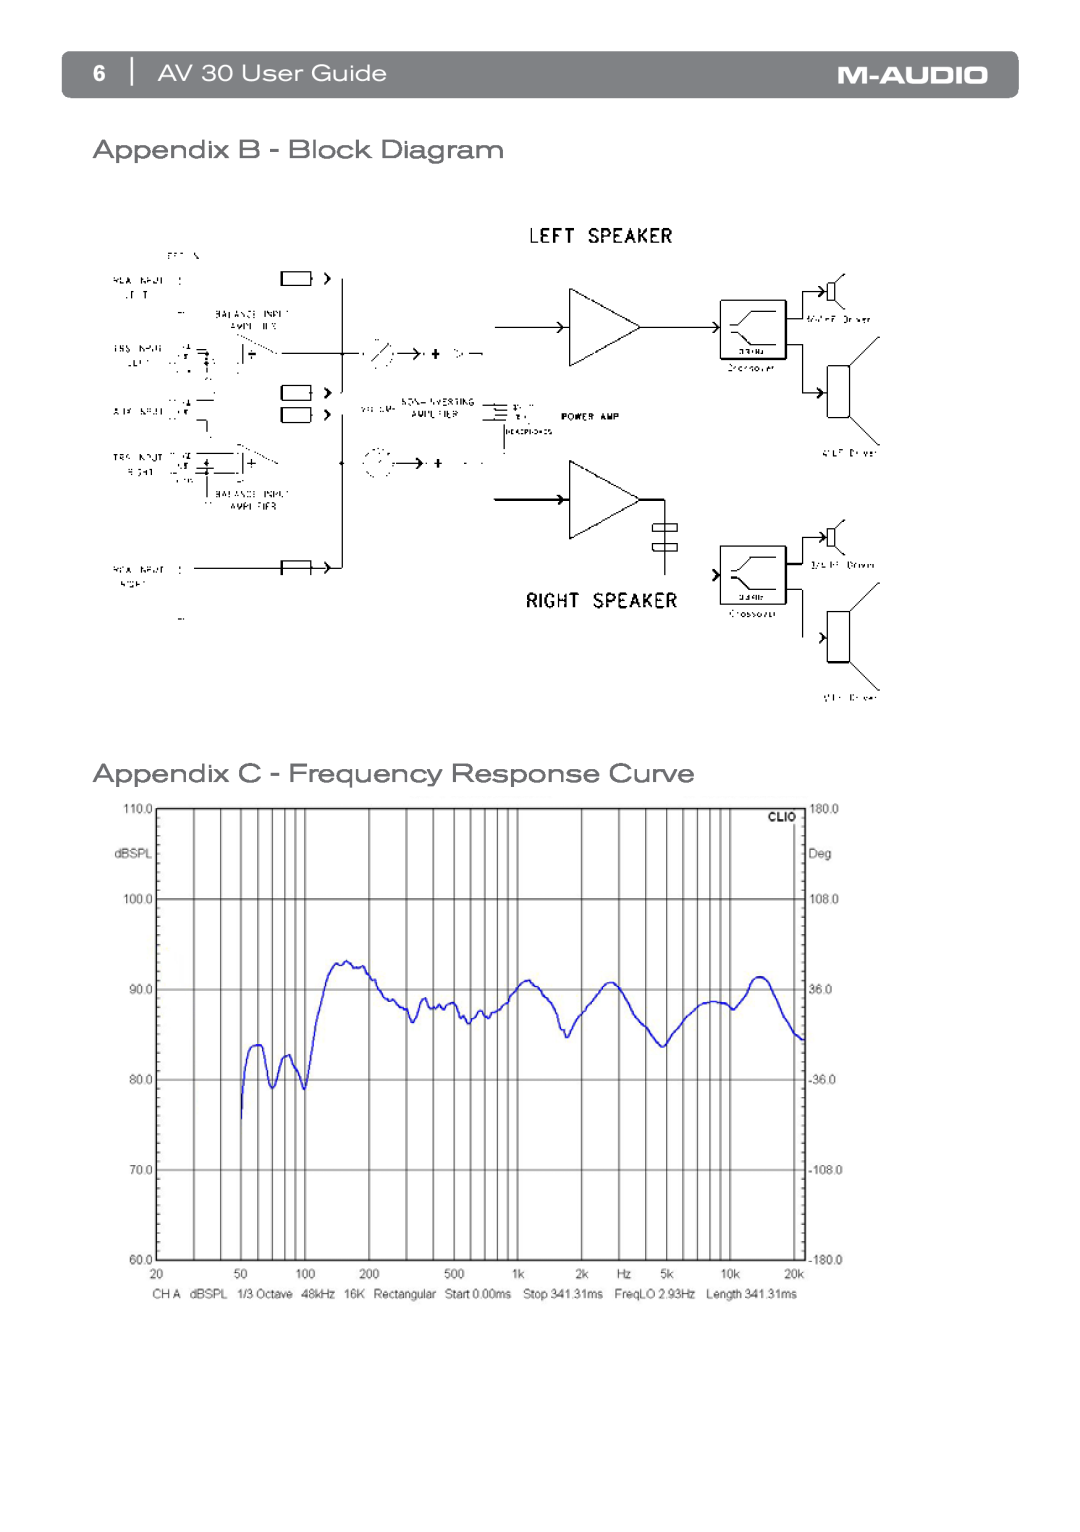 M-Audio manual Appendix B - Block Diagram Appendix C - Frequency Response Curve, AV 30 User Guide 